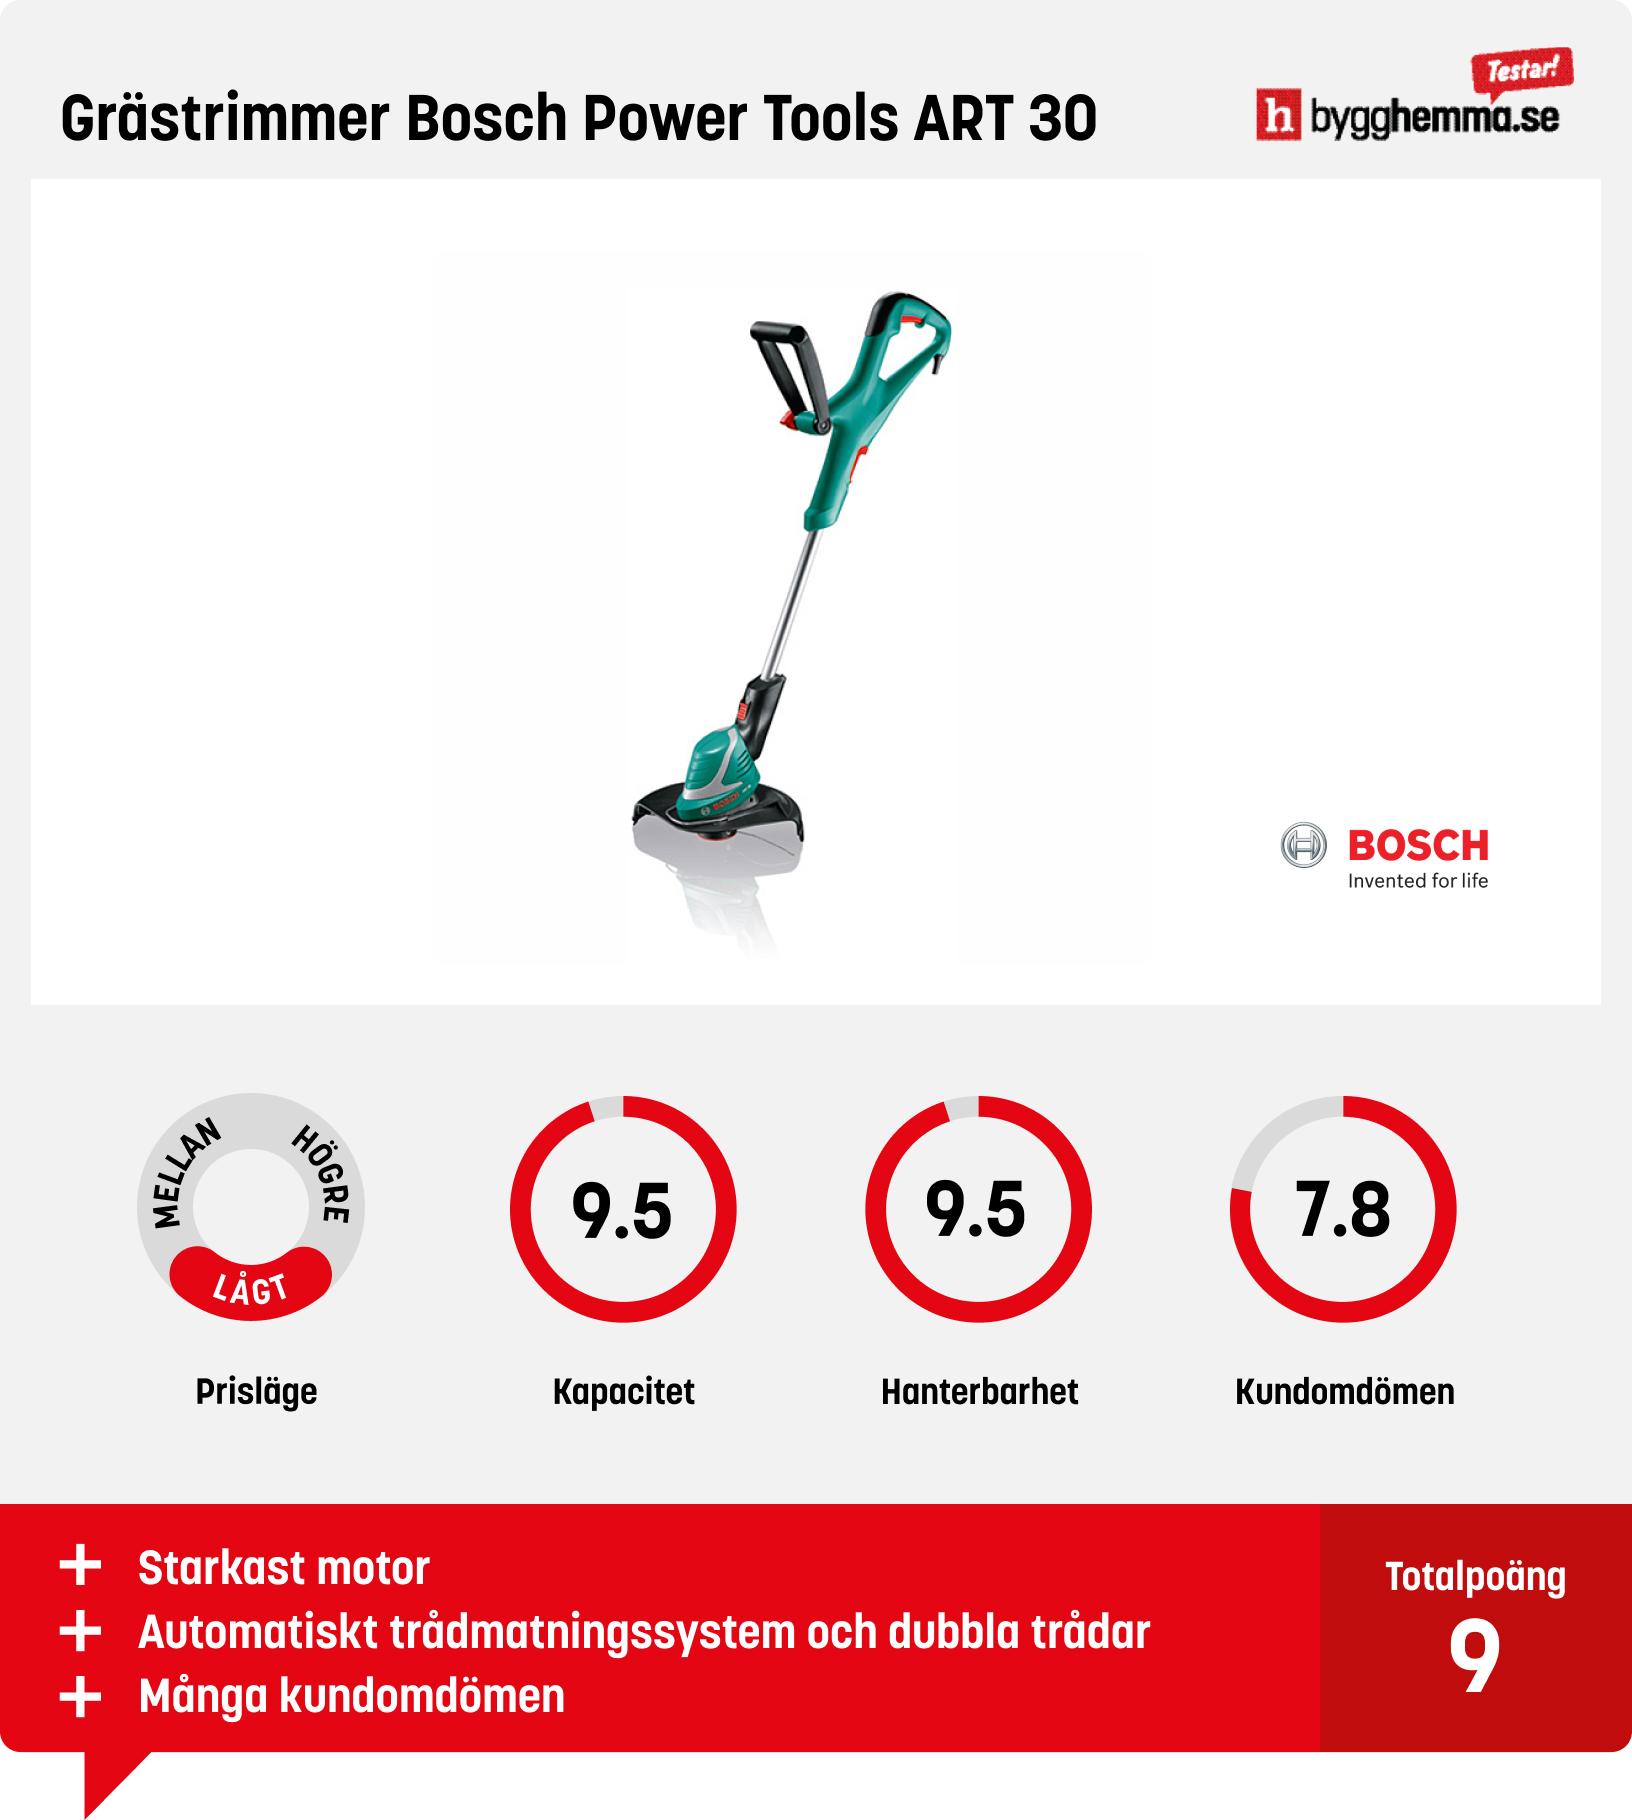 Elgrästrimmer bäst i test - Grästrimmer Bosch Power Tools ART 30